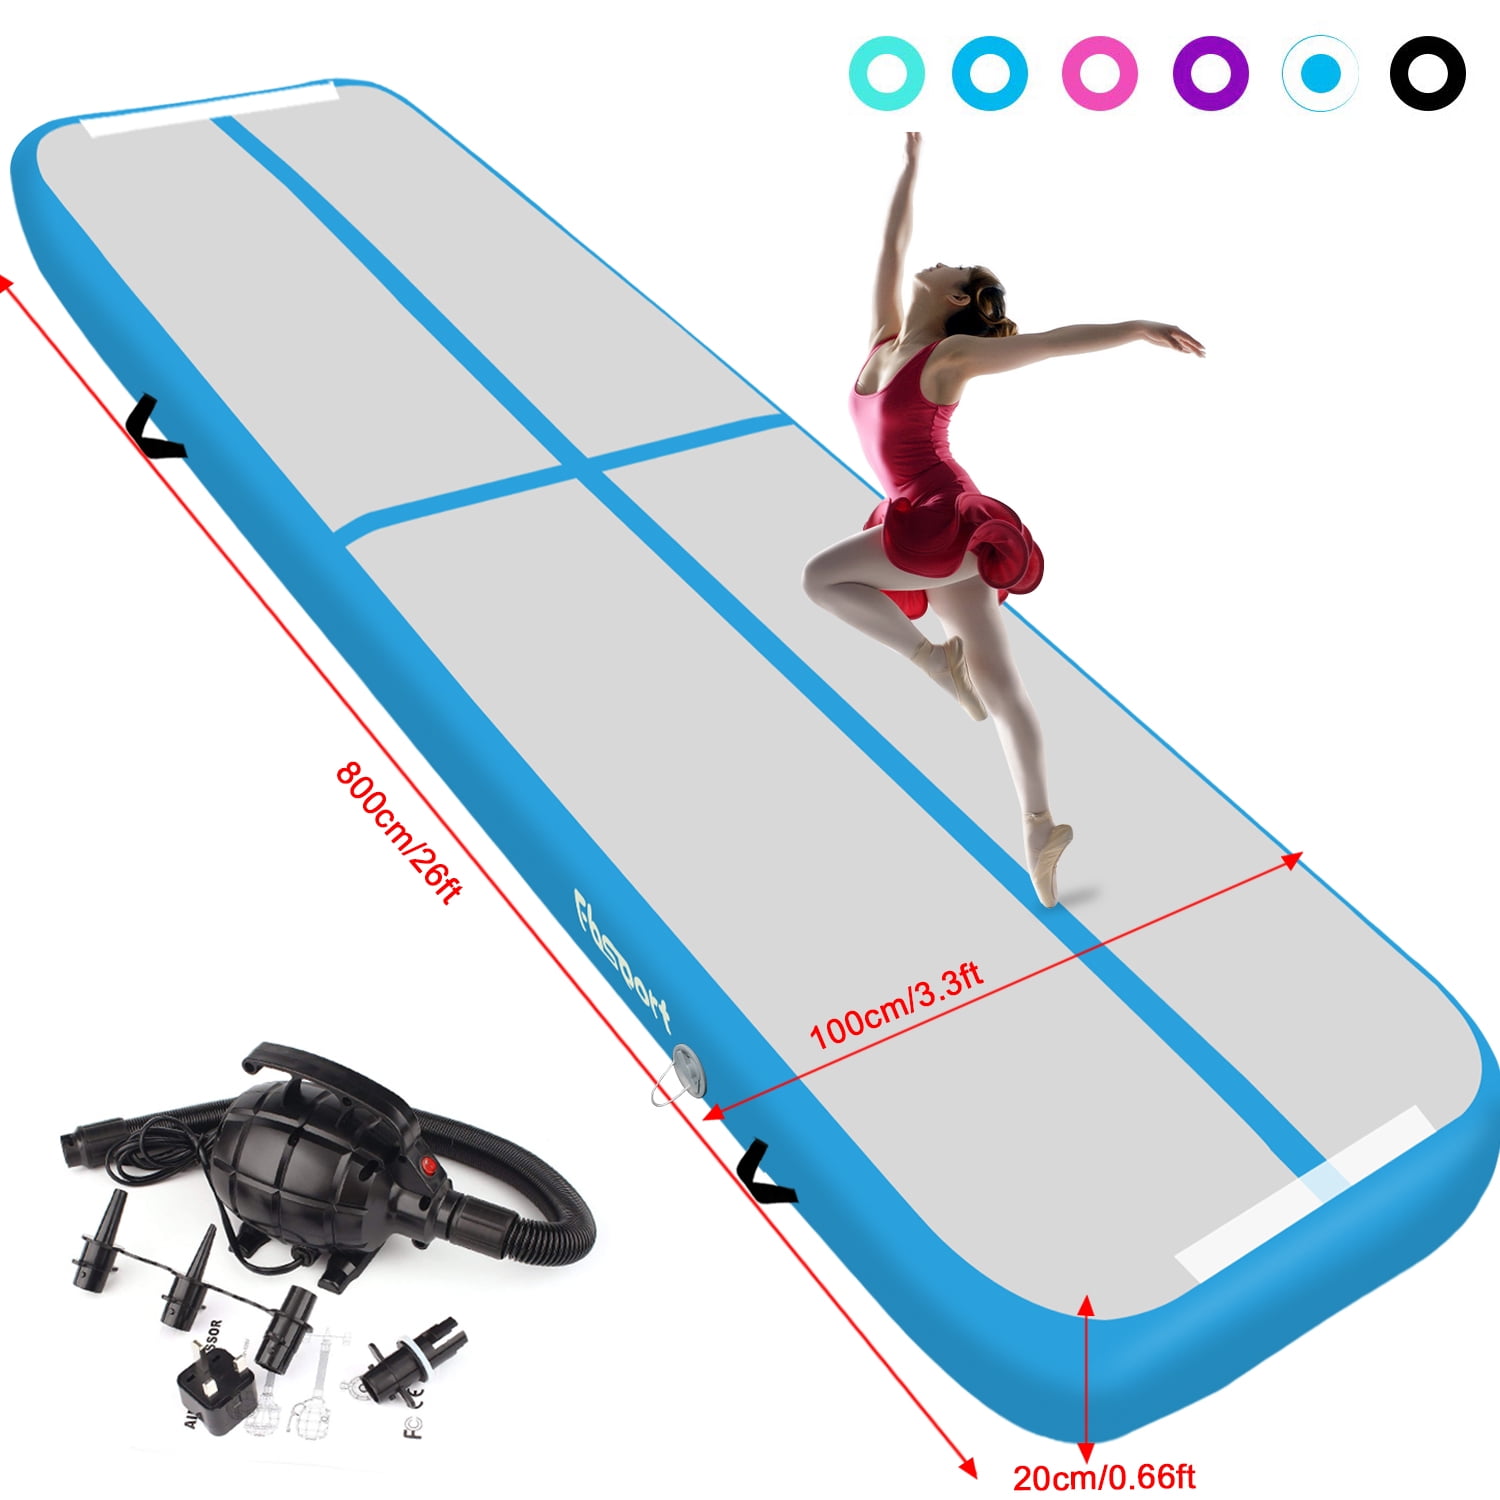 Fbsport 100/140*20ccm Round Air Track Air Spot Tumbling Inflatable Gymnastic Mat 